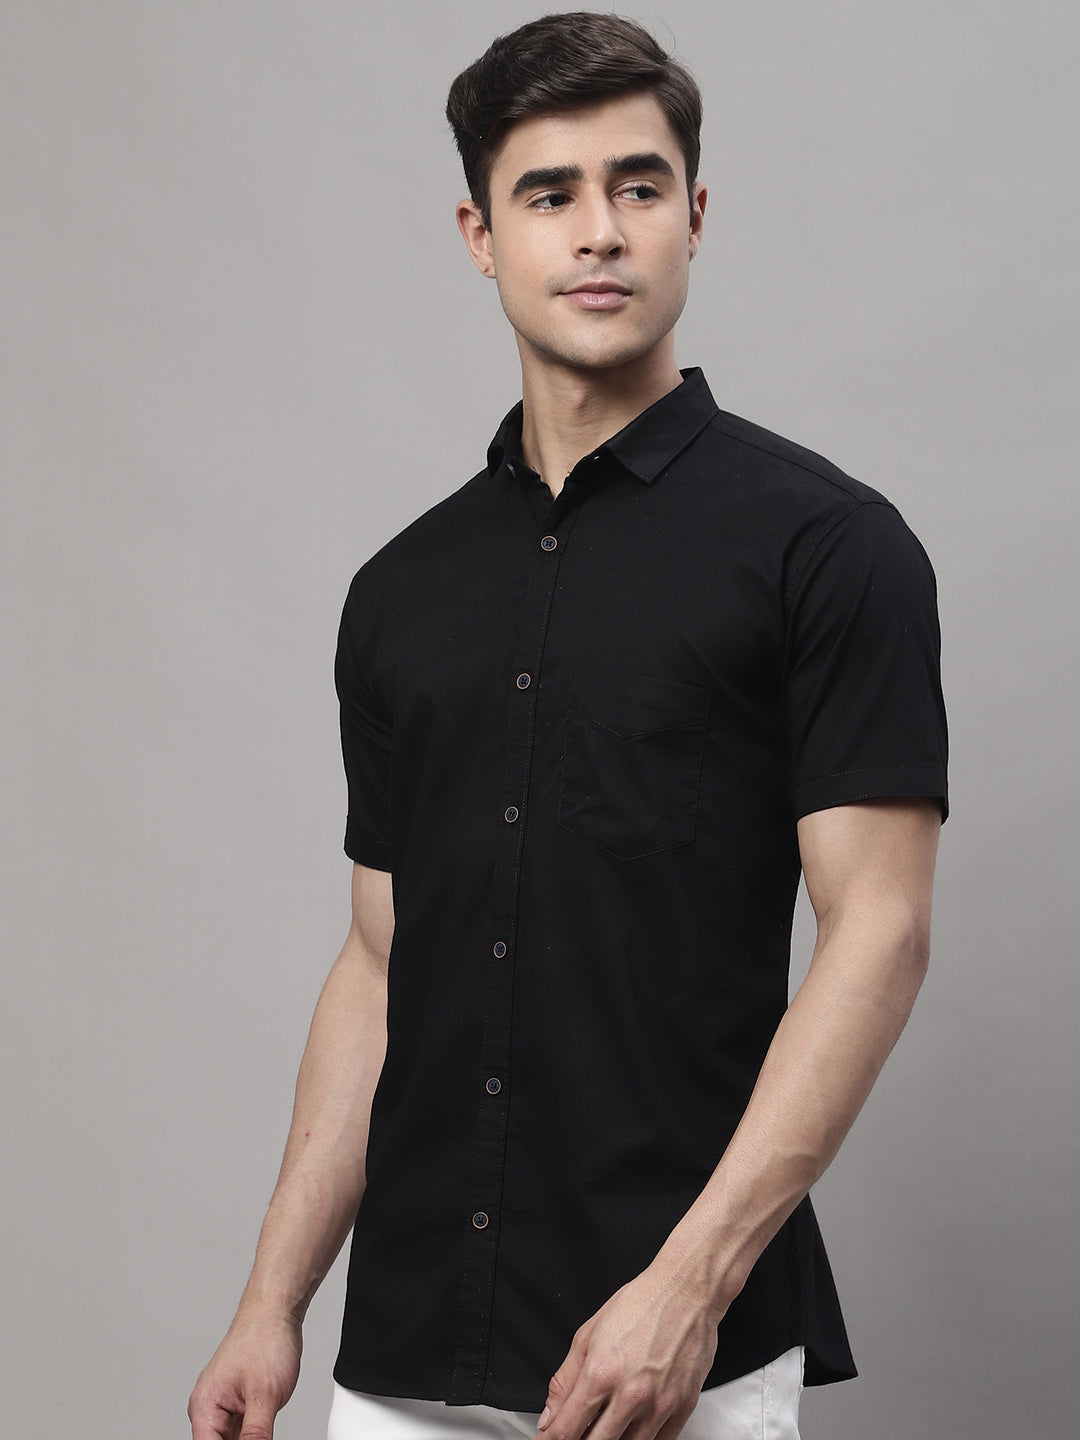 Unique and Fashionable Pure Cotton Half shirt - Black